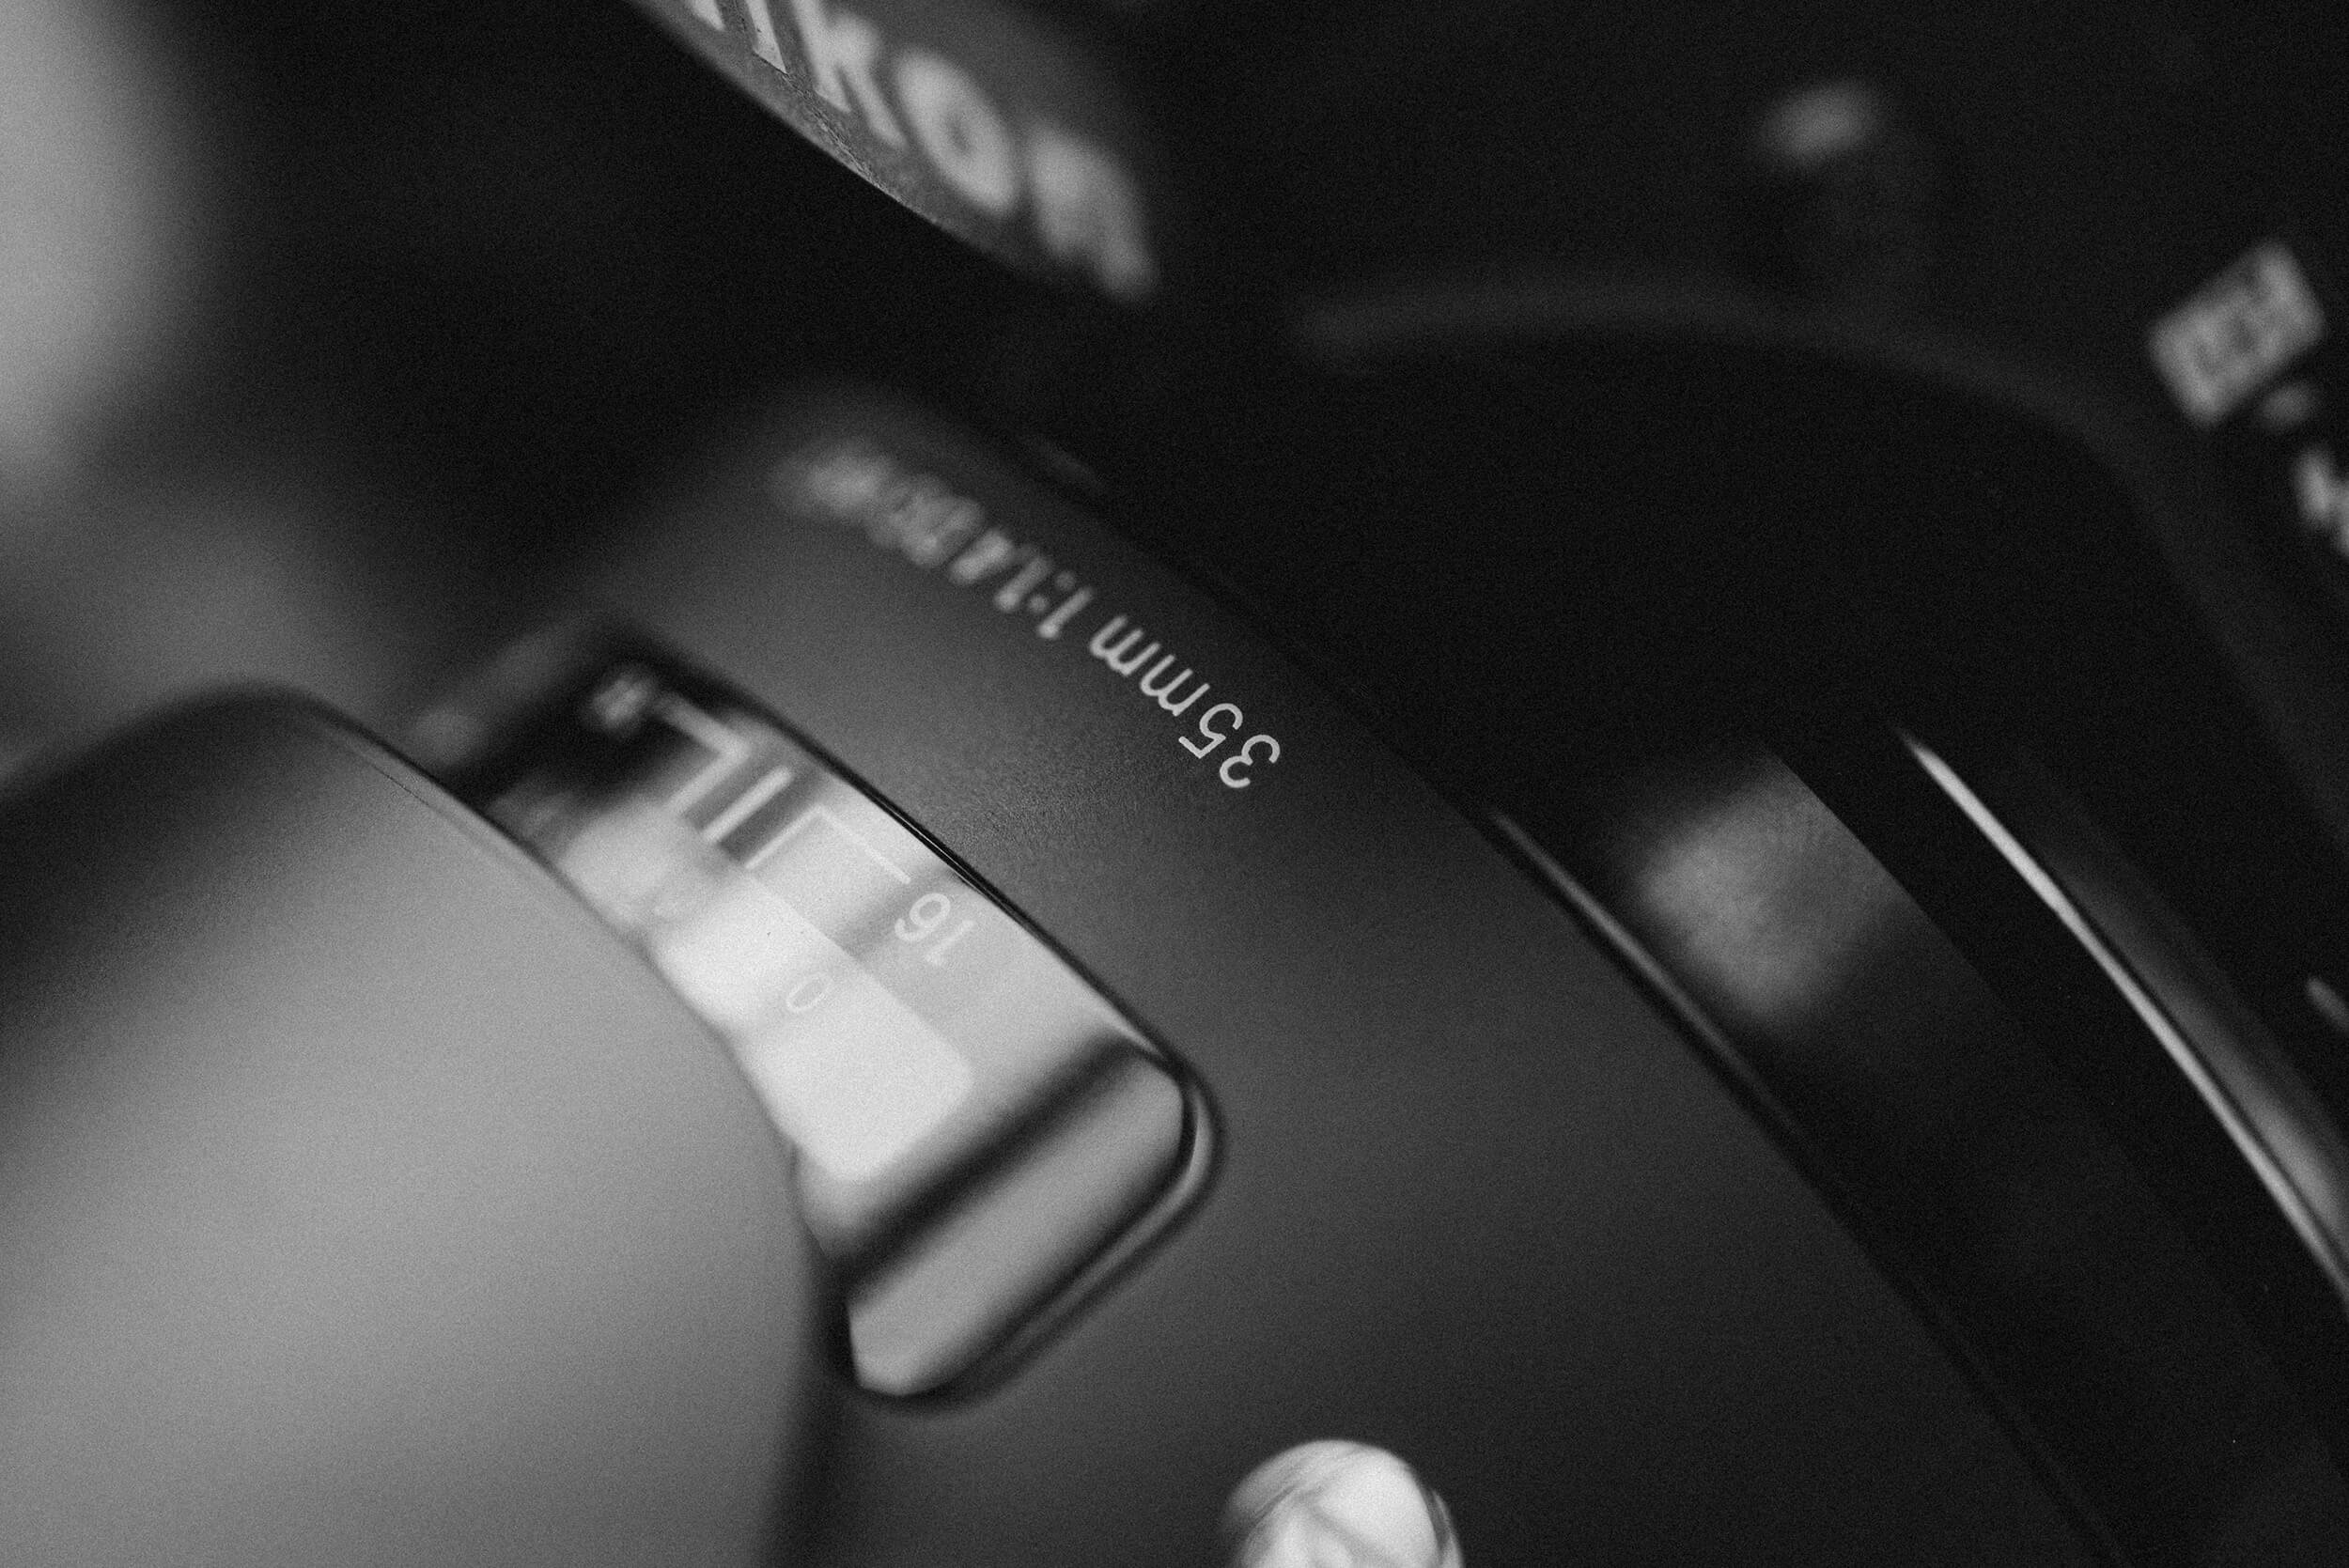 Review: a new mirrorless camera